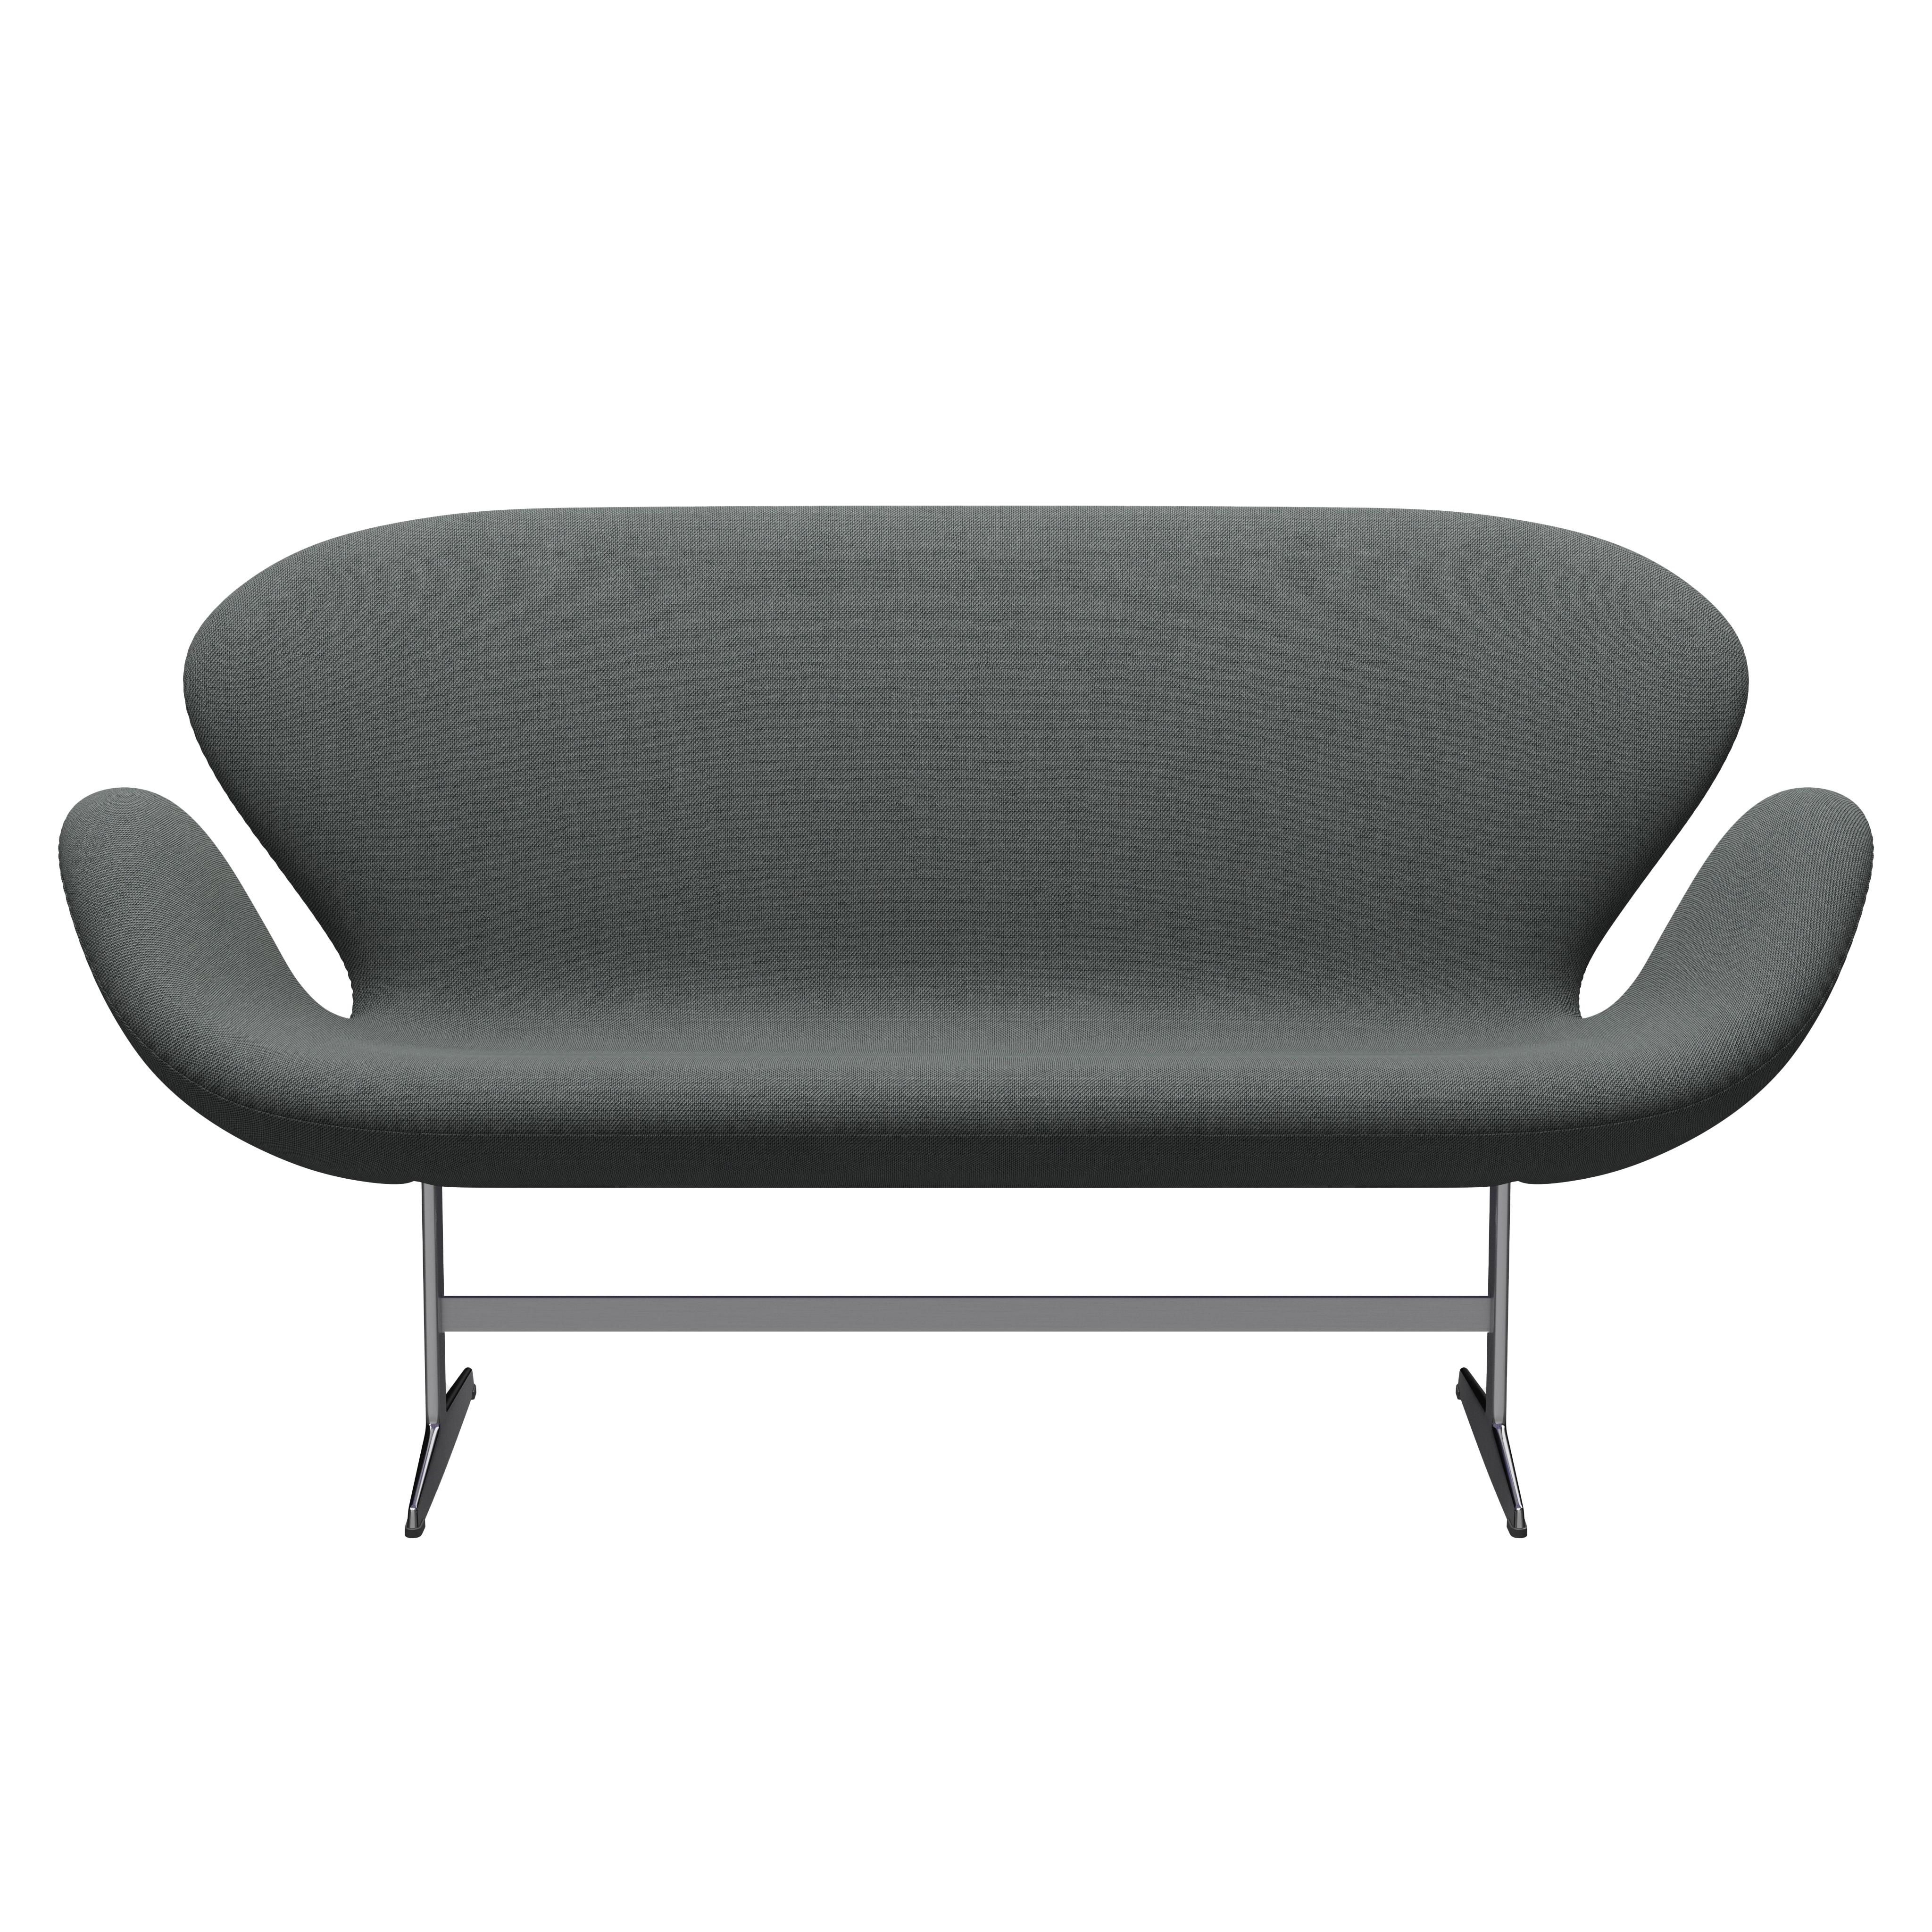 Metal Arne Jacobsen 'Swan' Sofa for Fritz Hansen in Fabric Upholstery (Cat. 2) For Sale